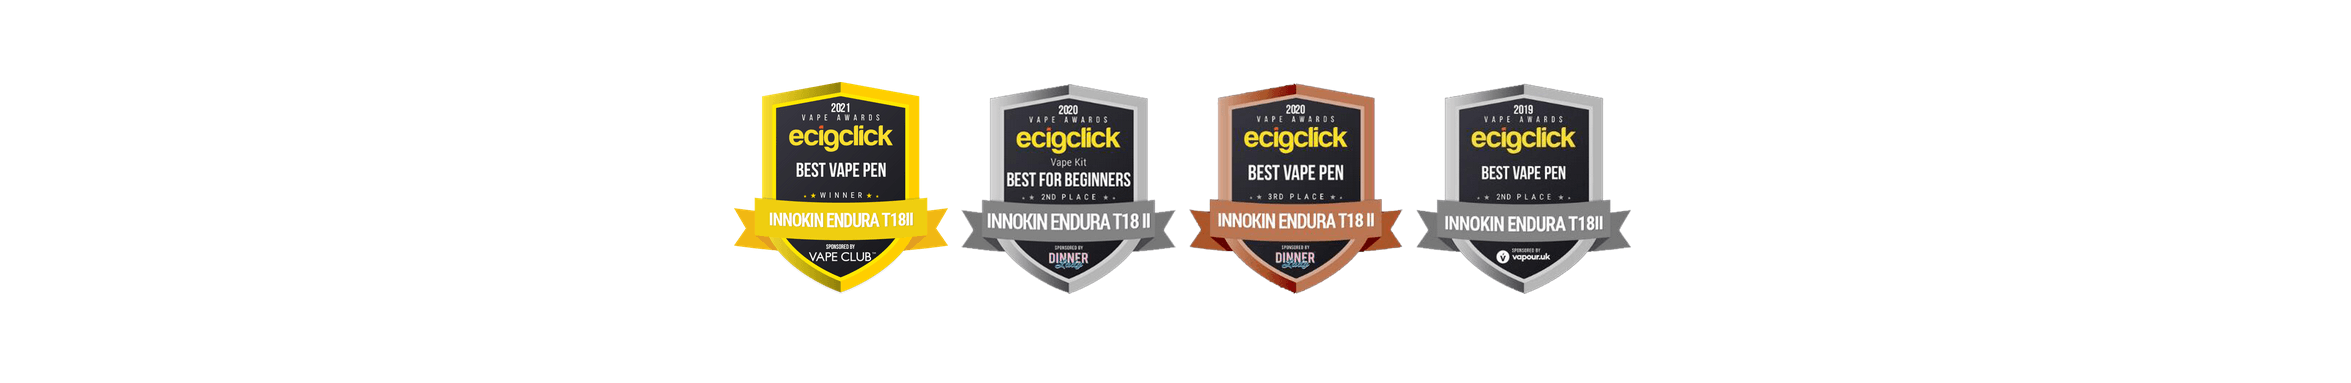 Innokin Endura T18II ecig click awards